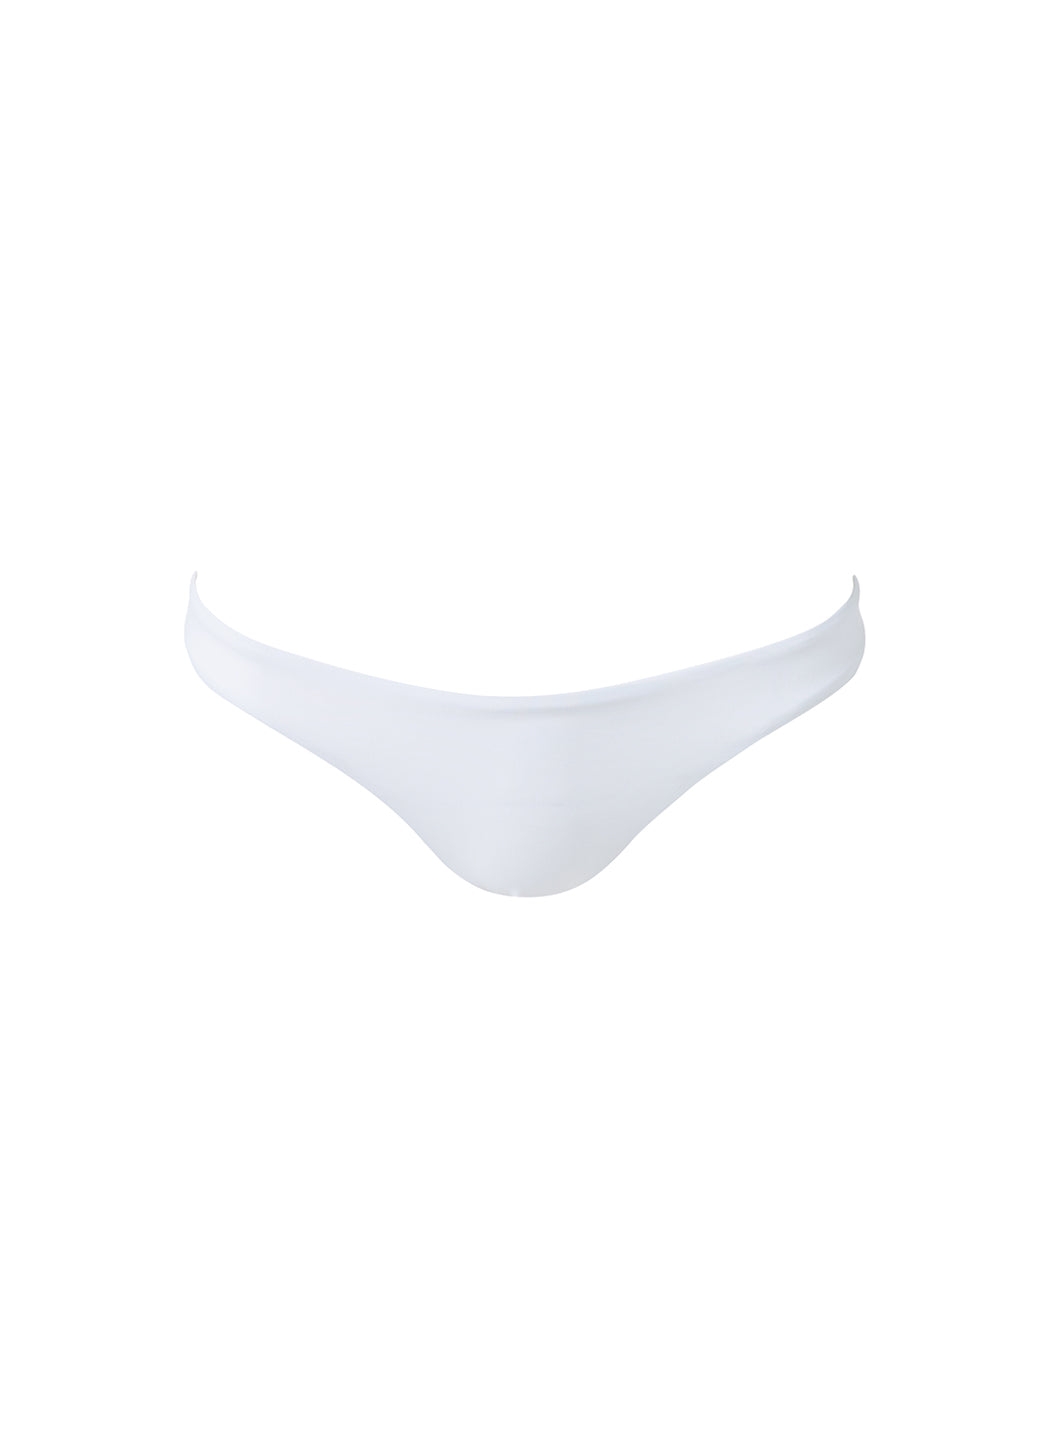 eze-white-bikini-bottom_cutout